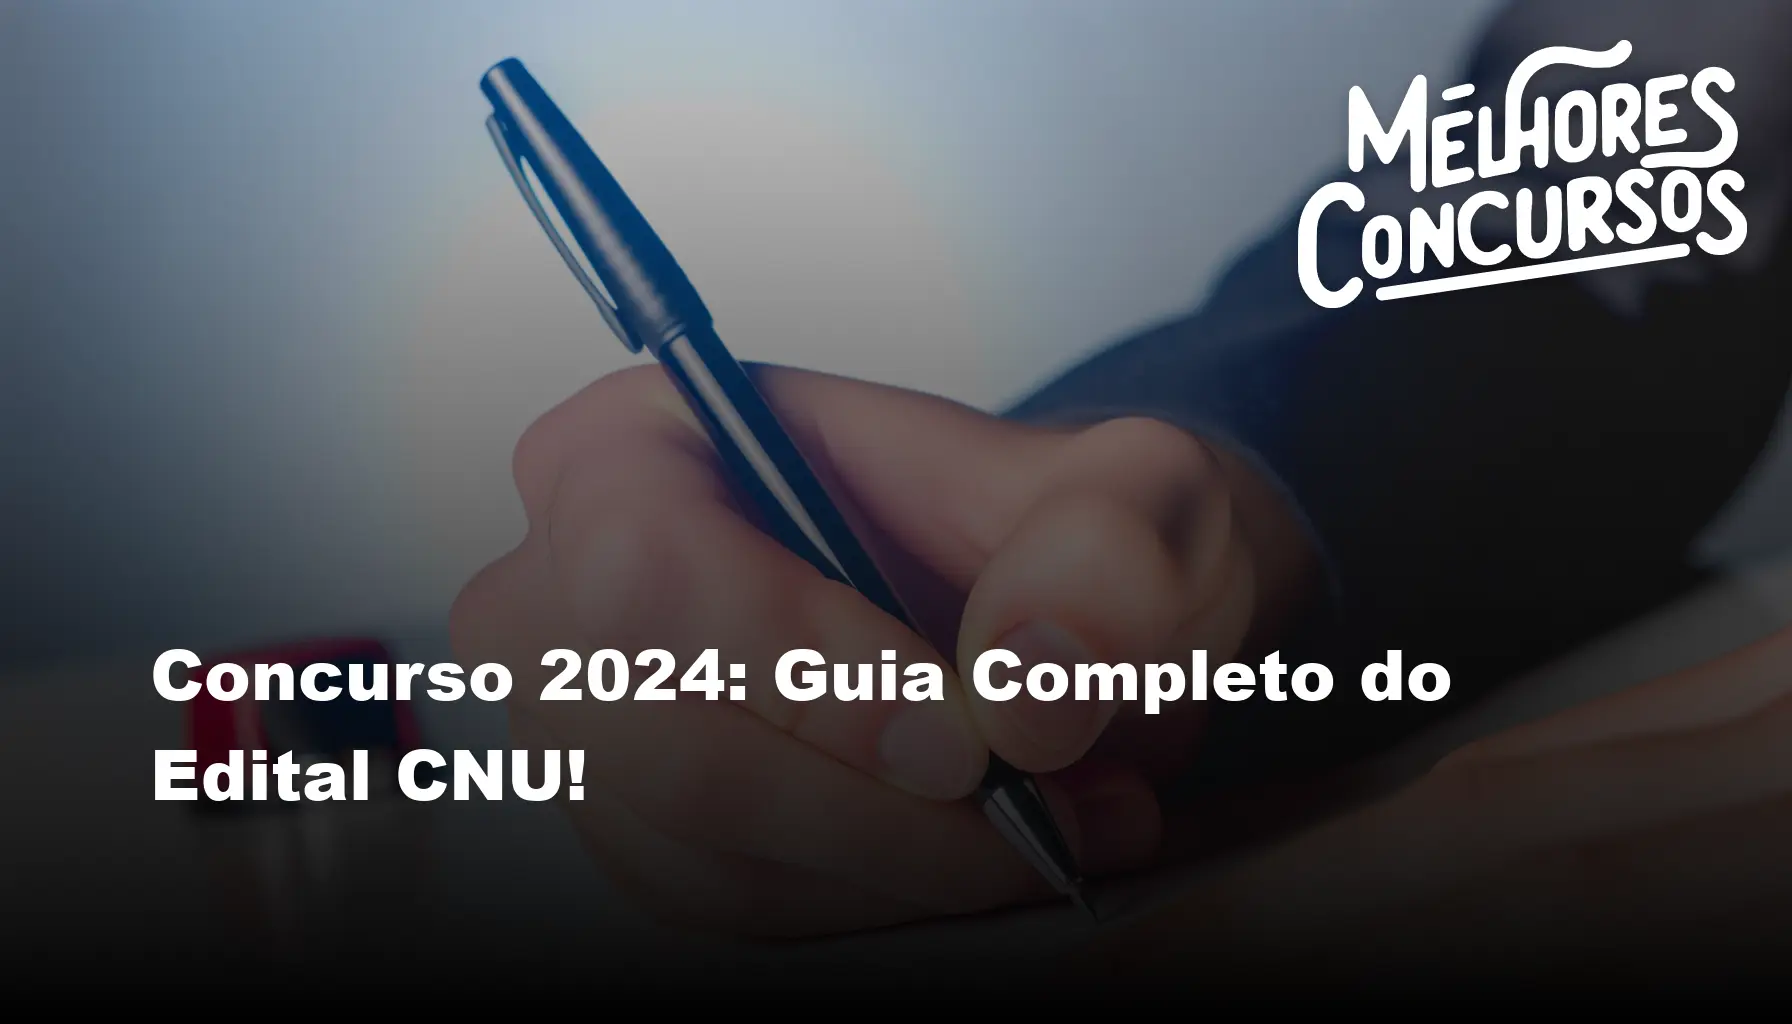 Concurso 2024 Guia Completo do Edital CNU!